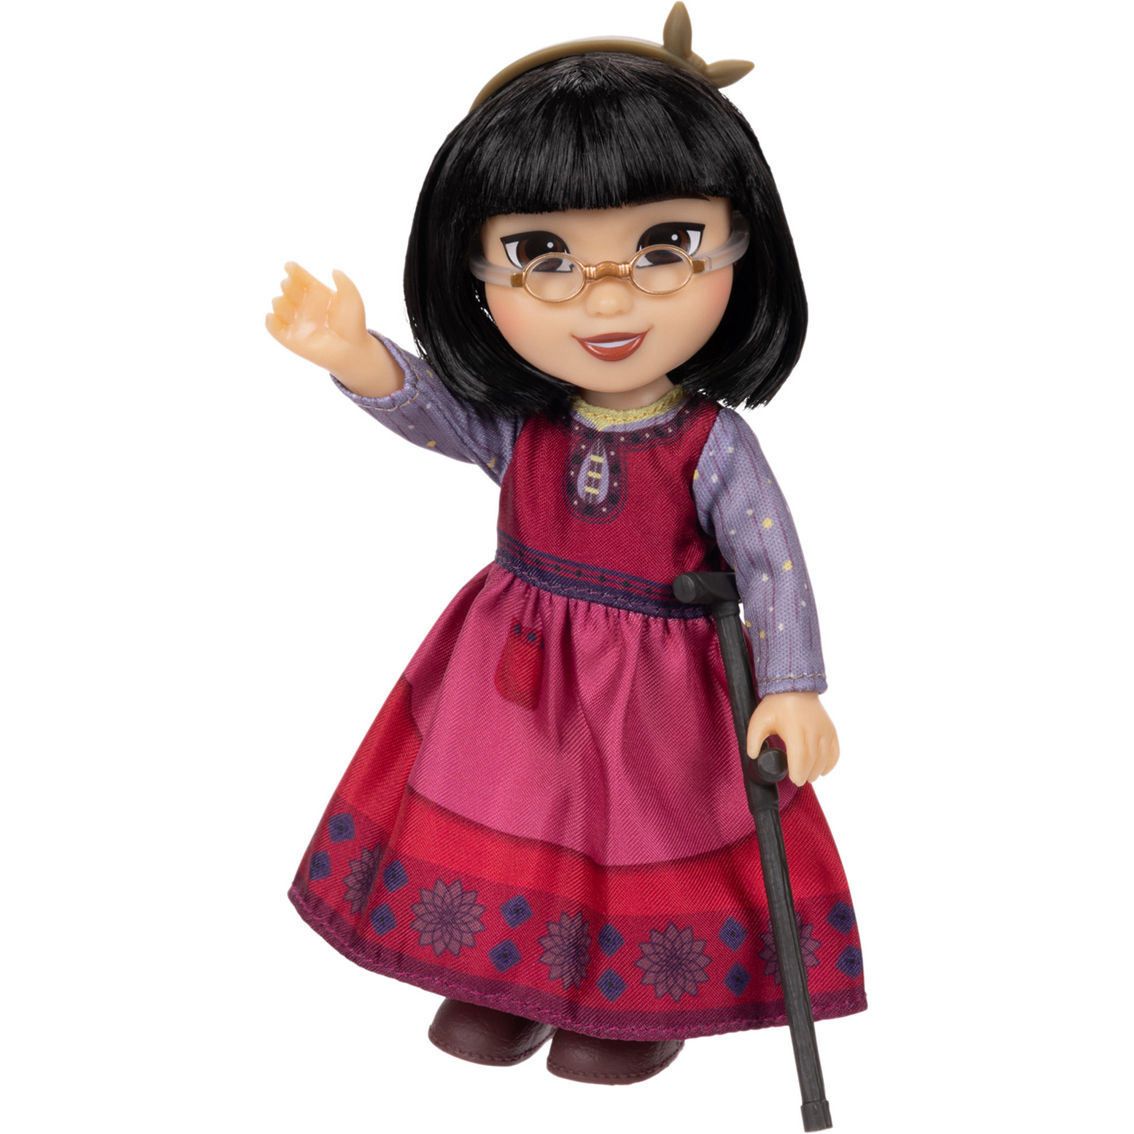 Disney Petite Dahlia Doll - Image 2 of 2